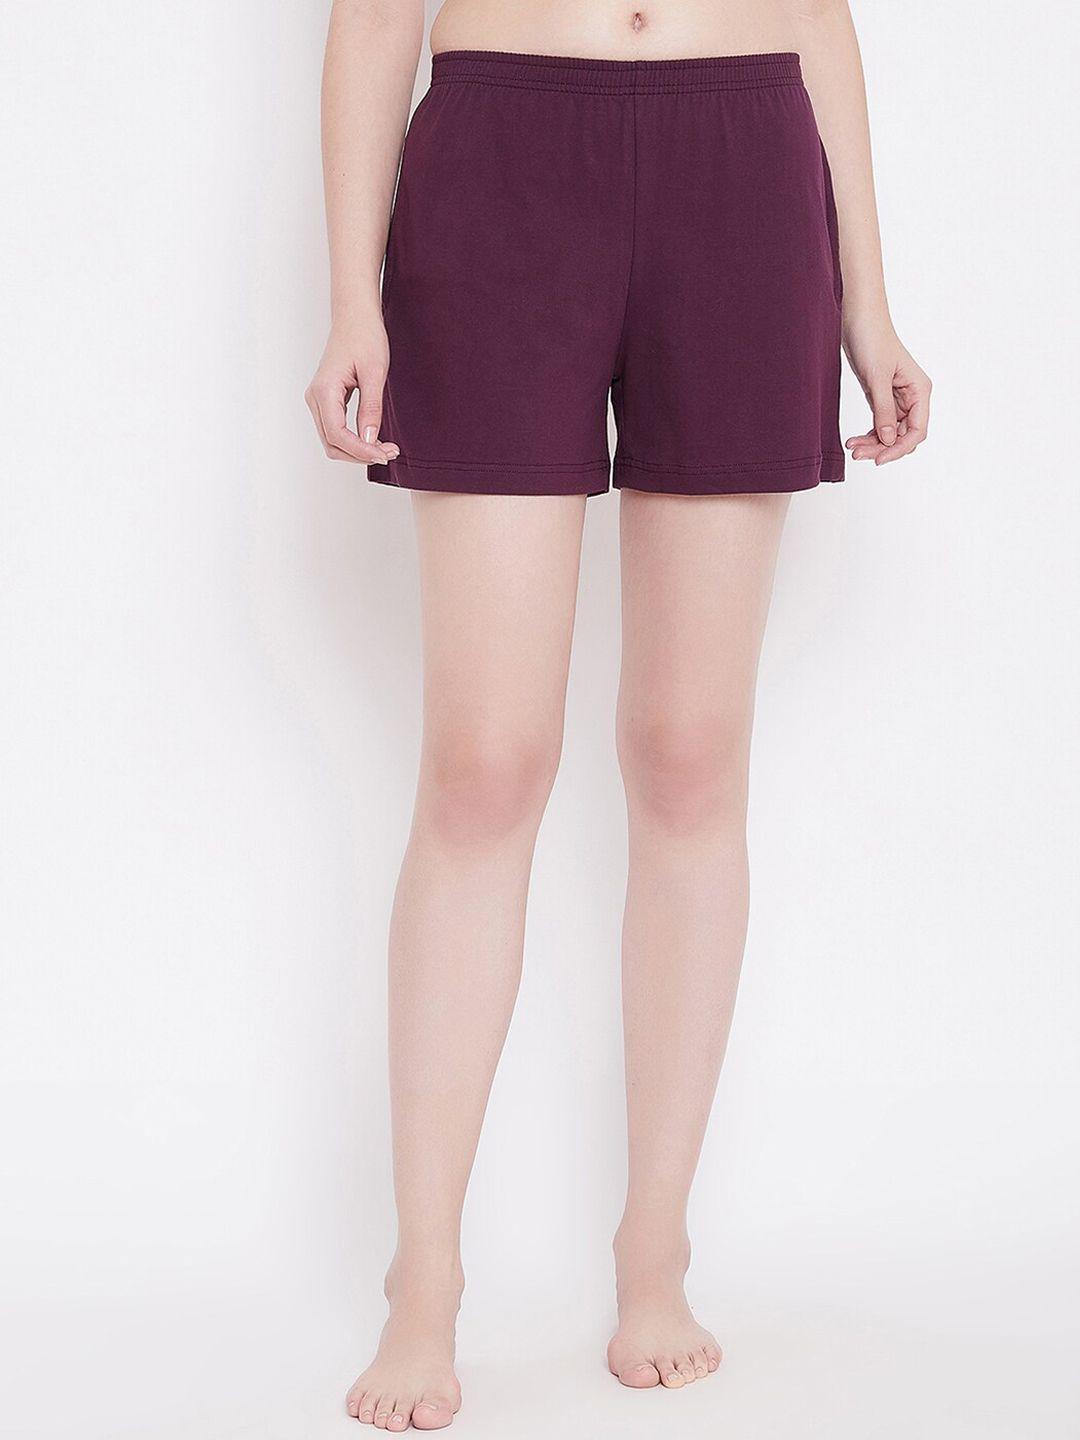 clovia-women-purple-solid-lounge-shorts